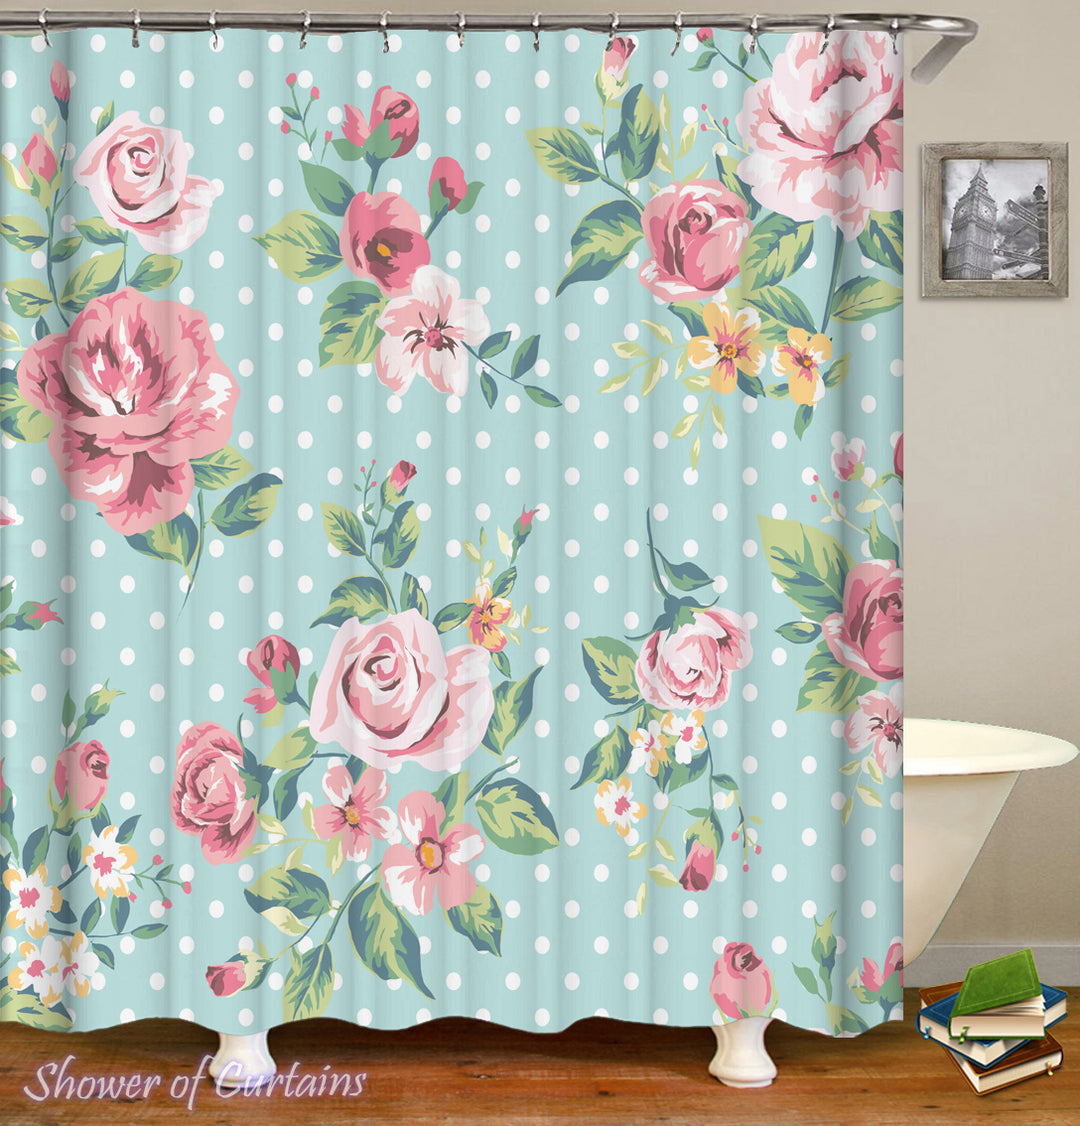 Shower Curtain Ideas - Classic Choice